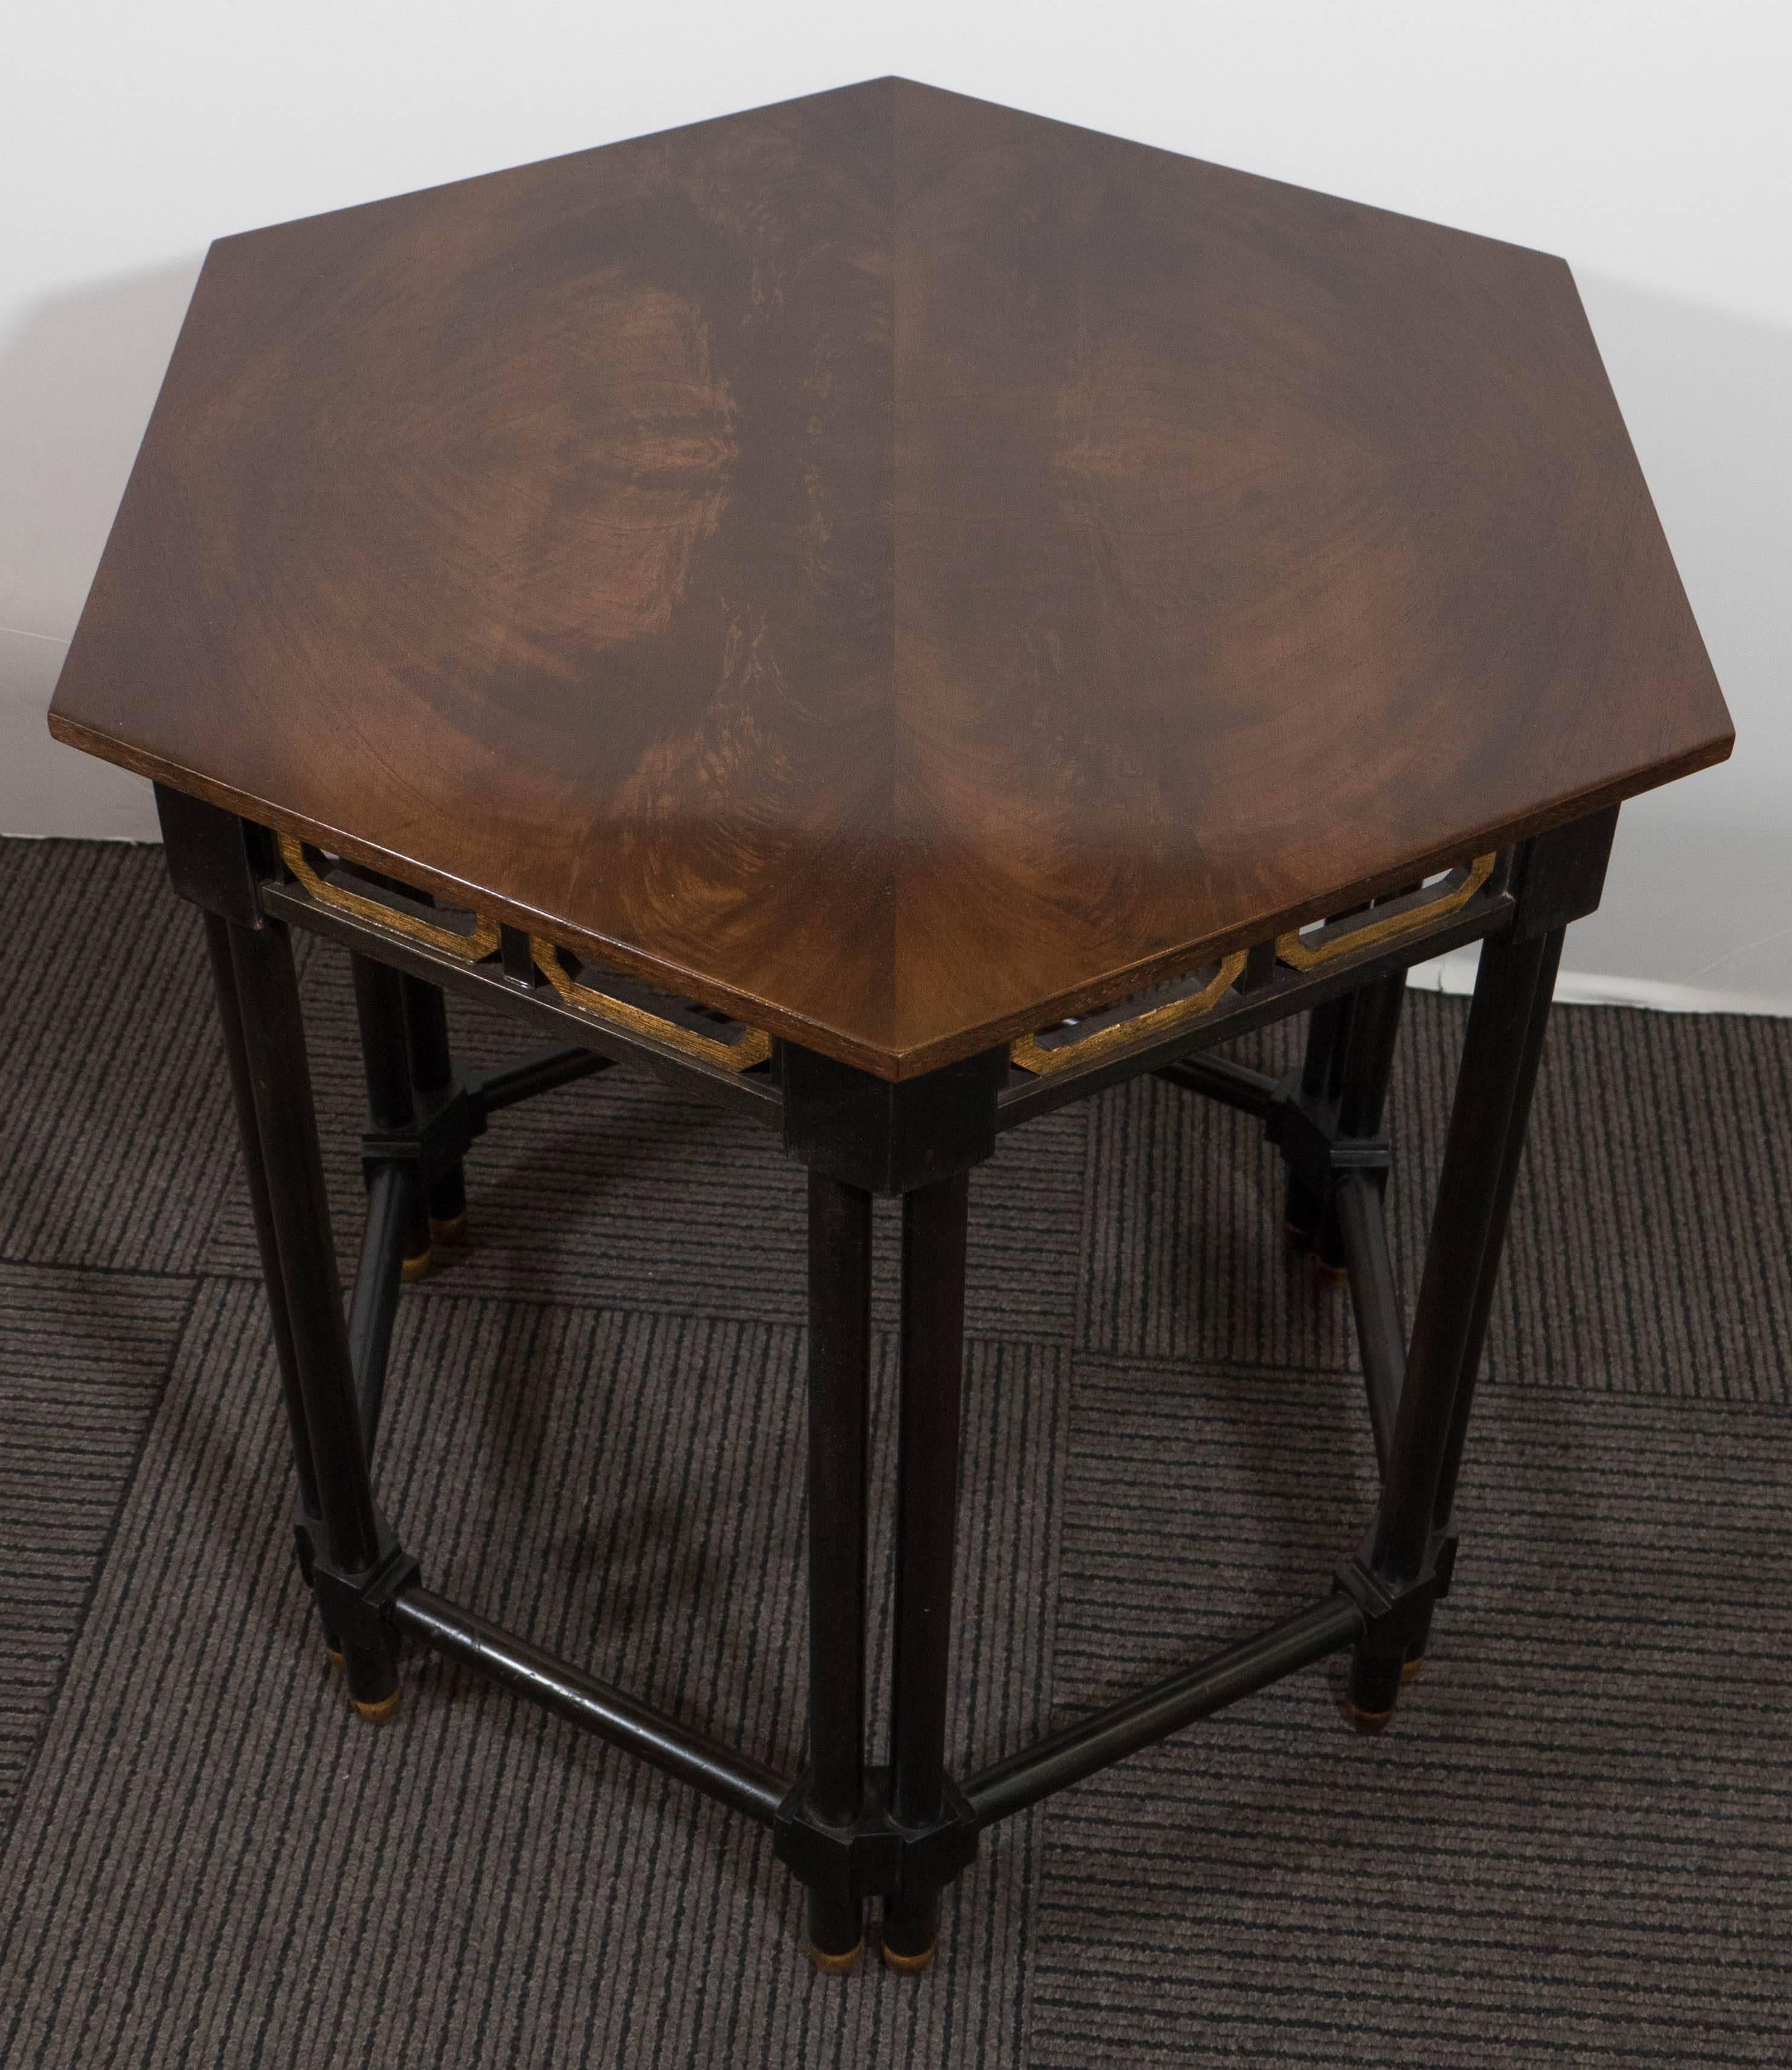 Gilt Pair of Moorish Style Hexagonal Side Tables by Baker Furniture